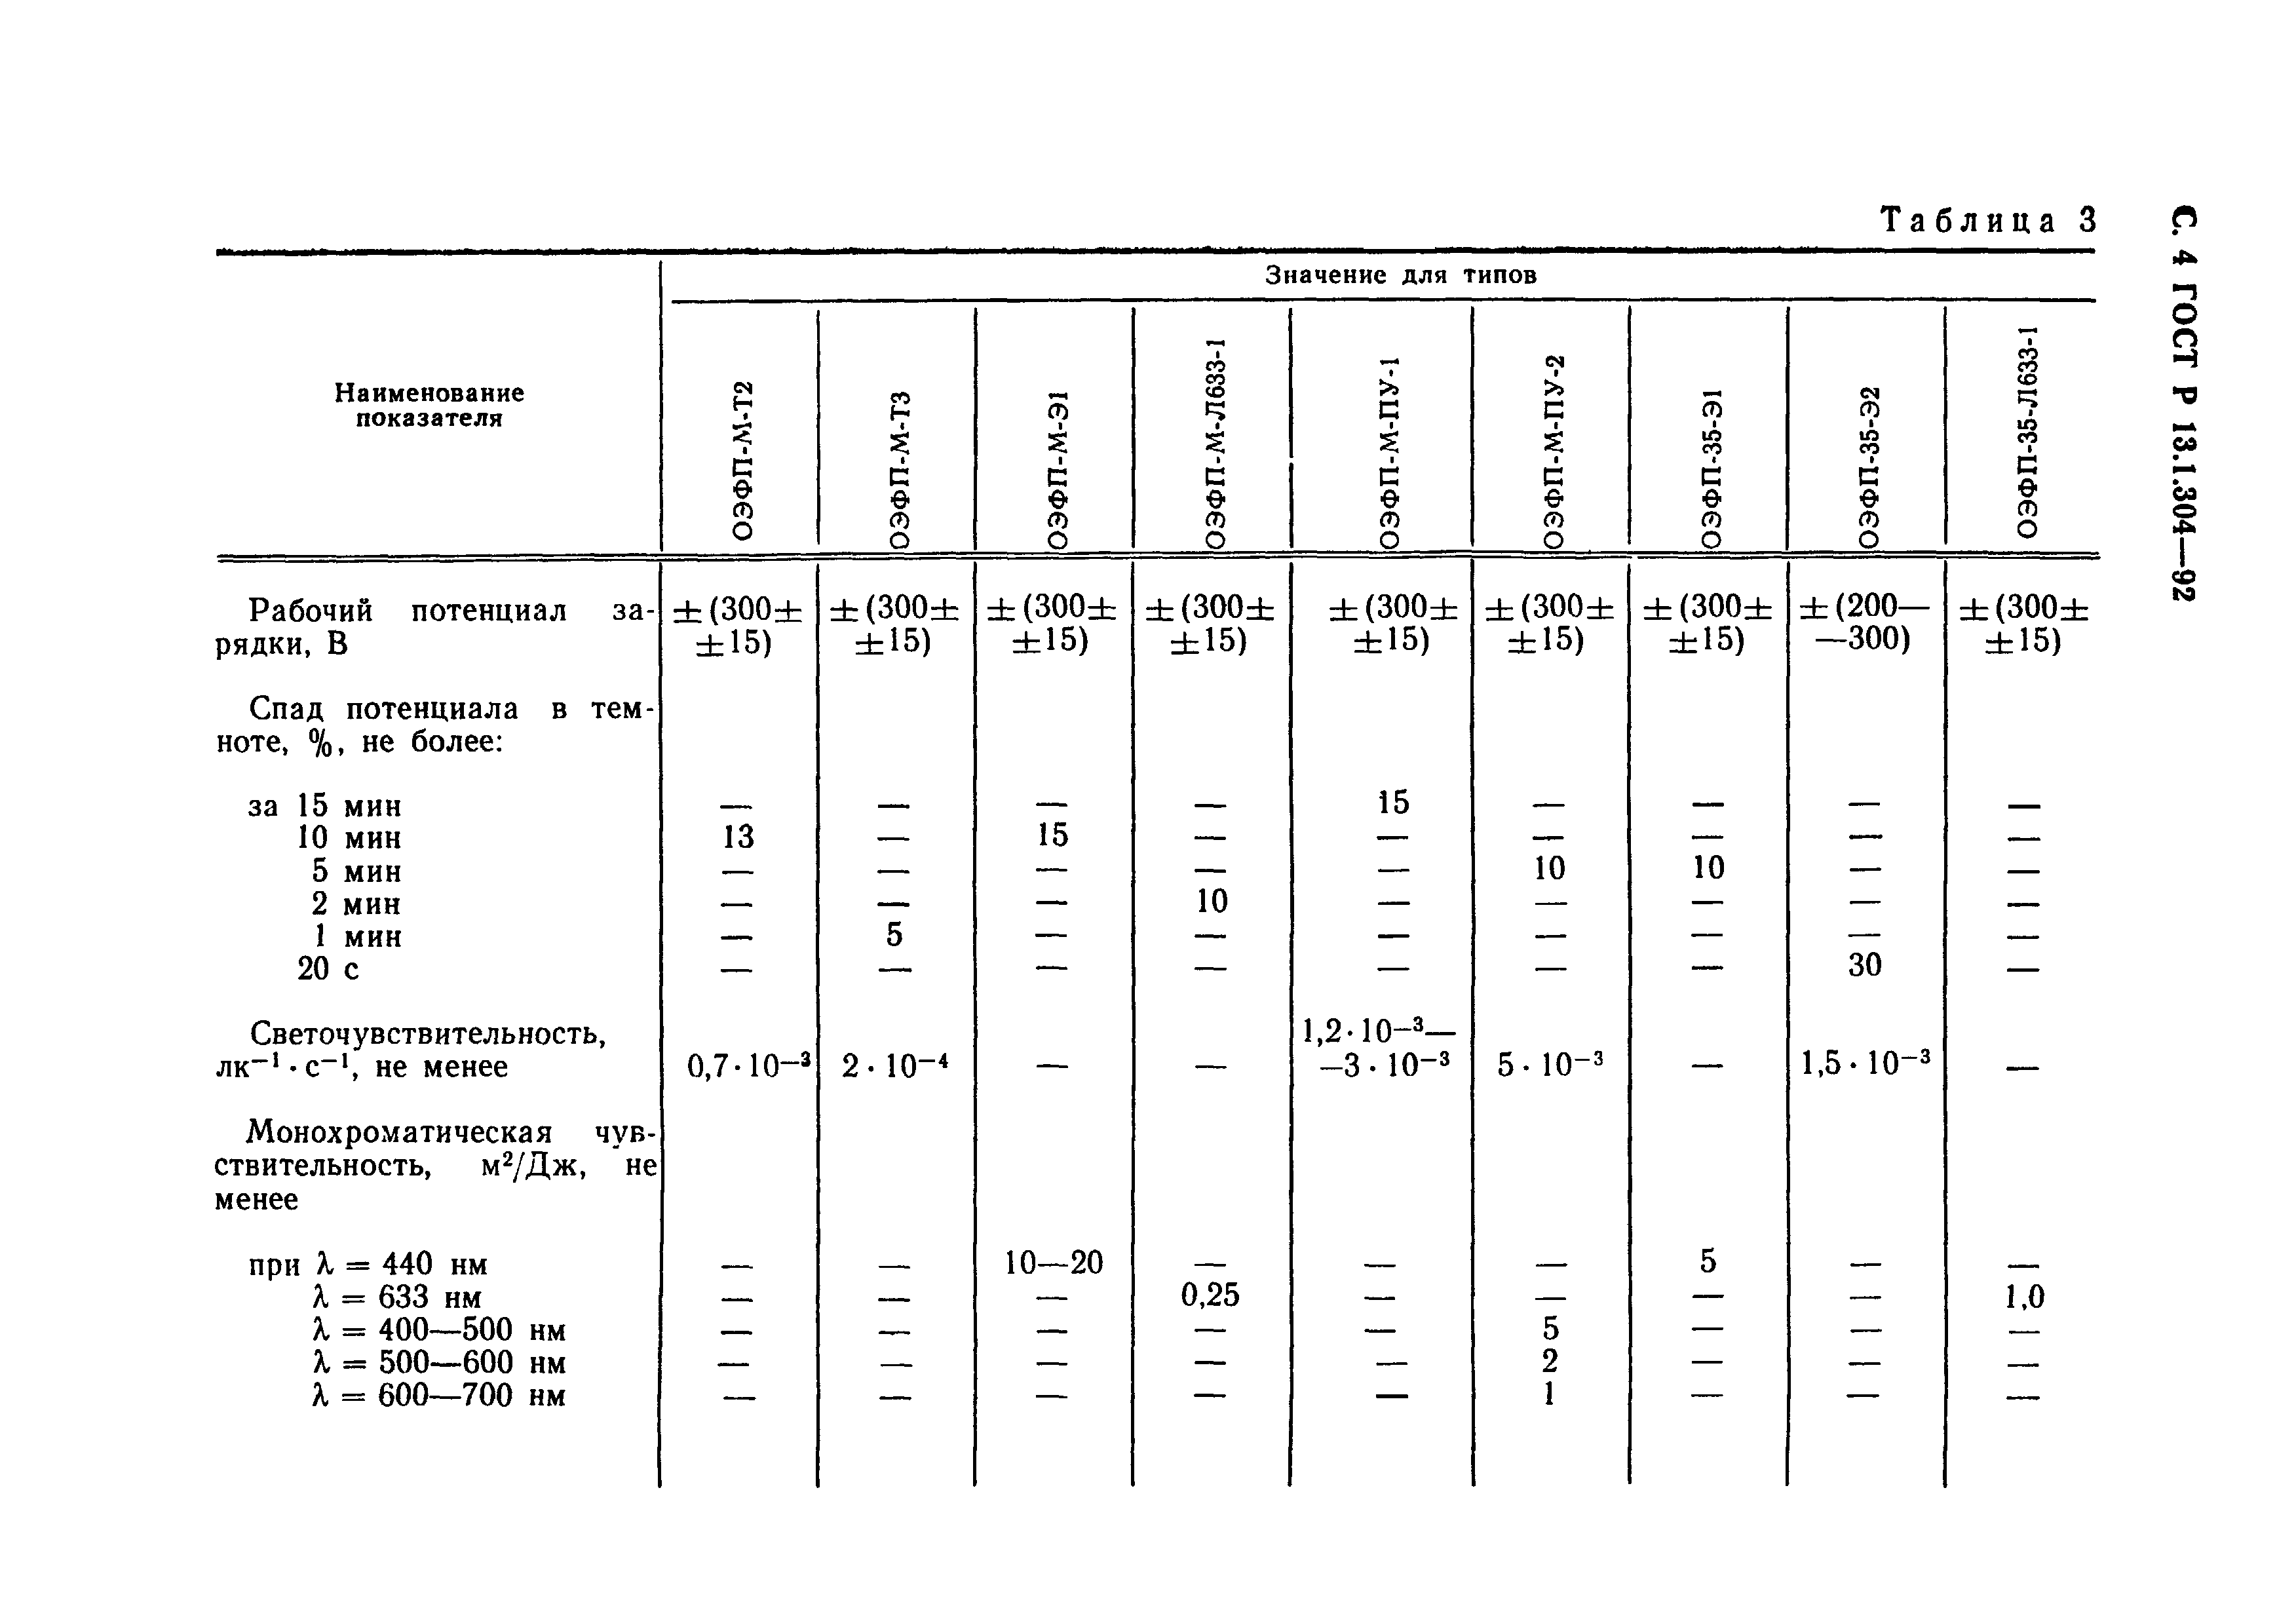 ГОСТ Р 13.1.304-92